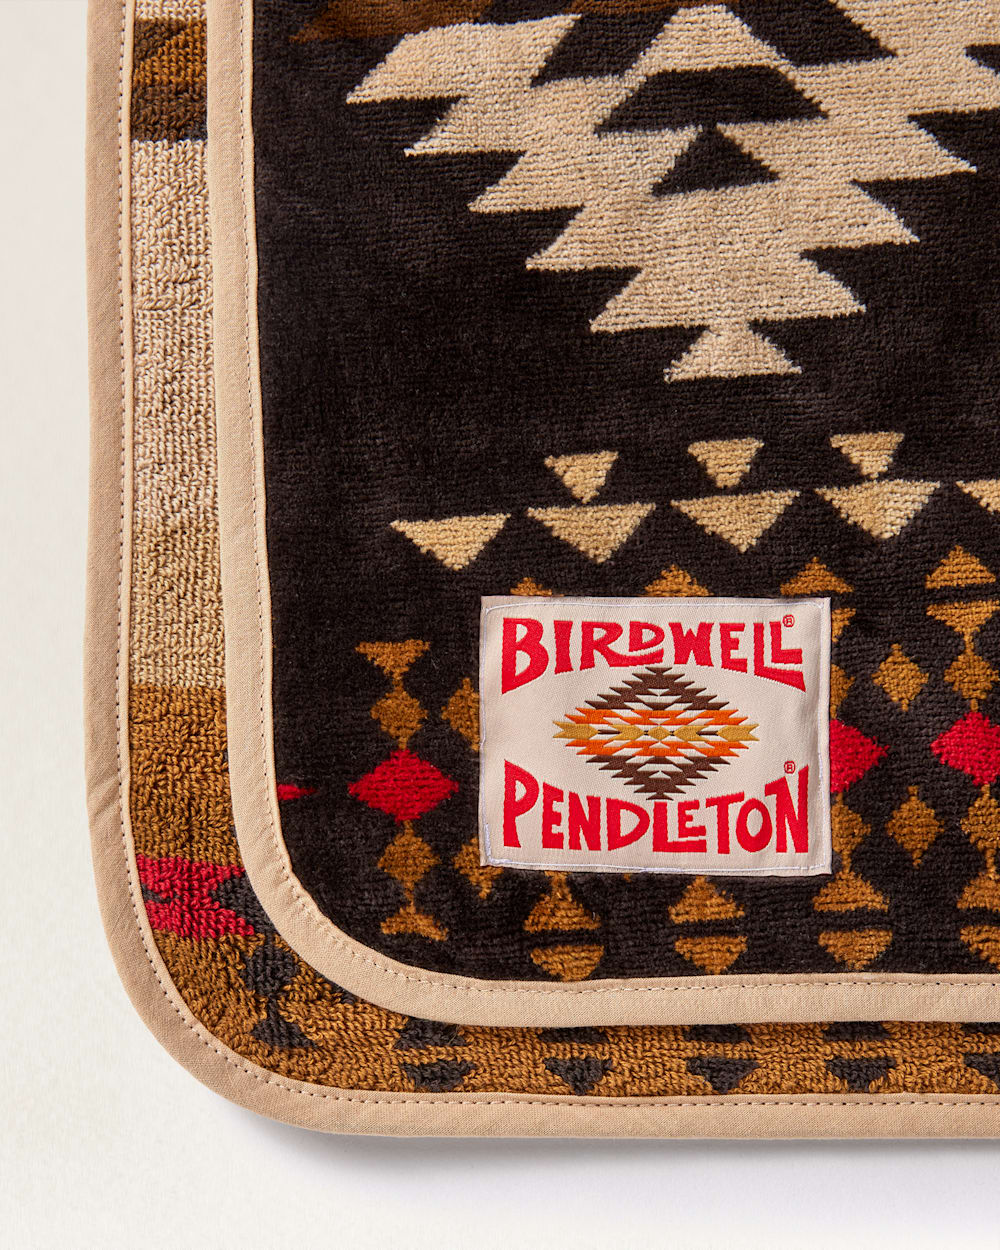 ALTERNATE VIEW OF BIRDWELL X PENDLETON ADULT HOODED TOWEL IN BROWN RANCHO ARROYO image number 4